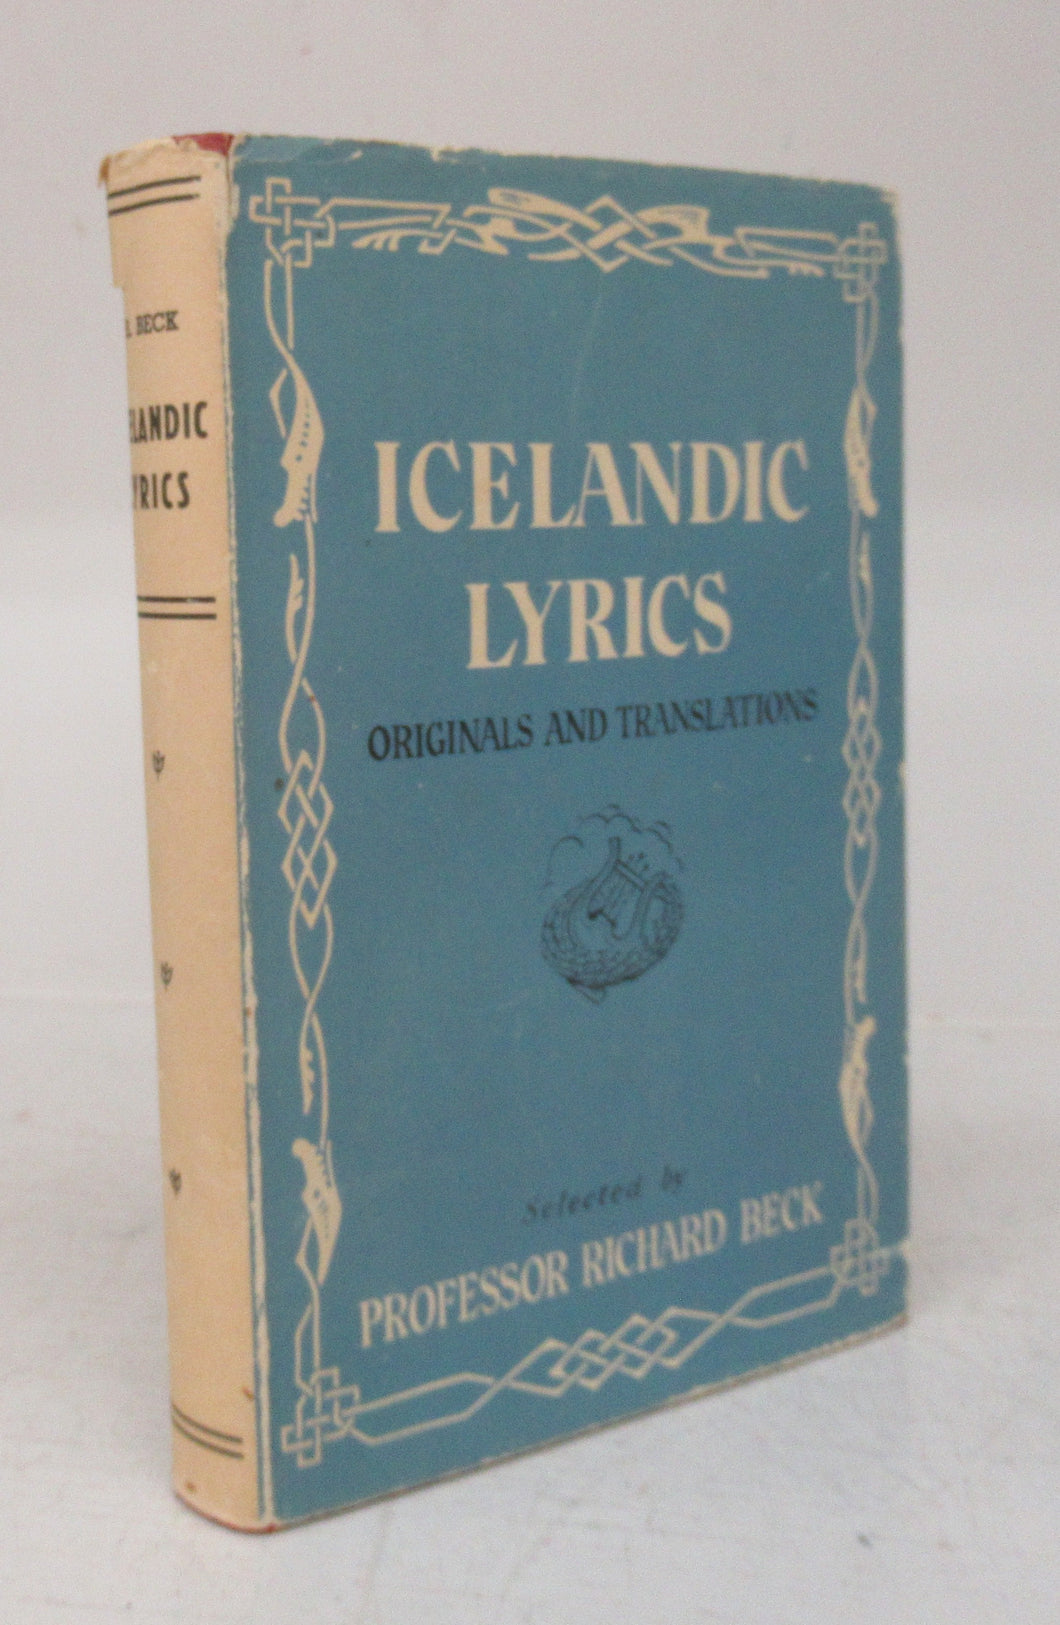 Icelandic Lyrics: Originals and Translations